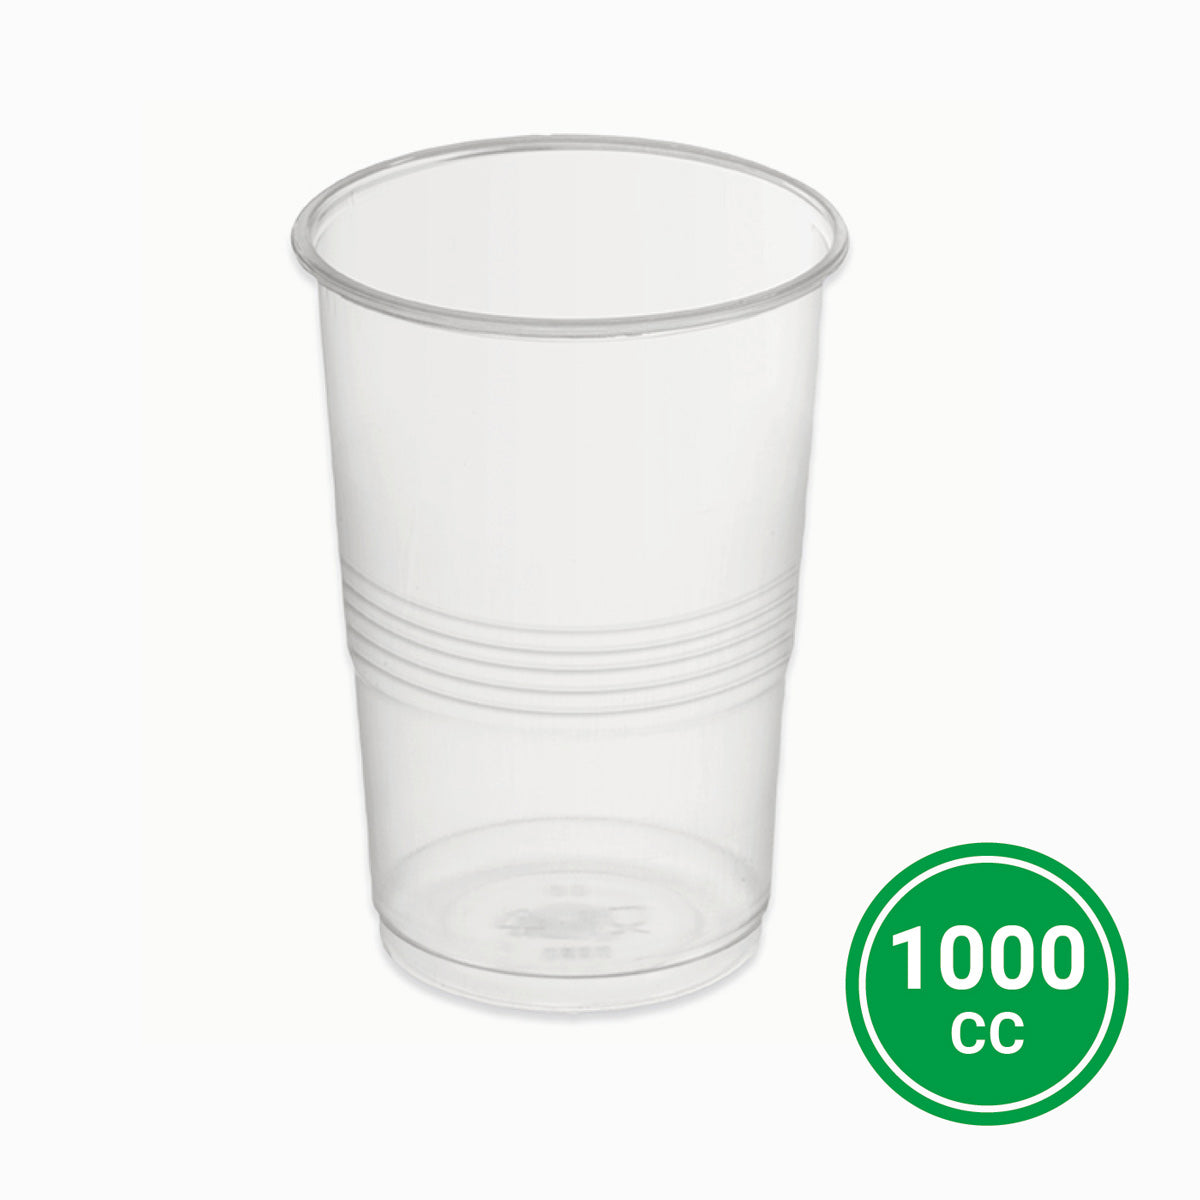 Transparent incassable Litrone VASC 1000cc